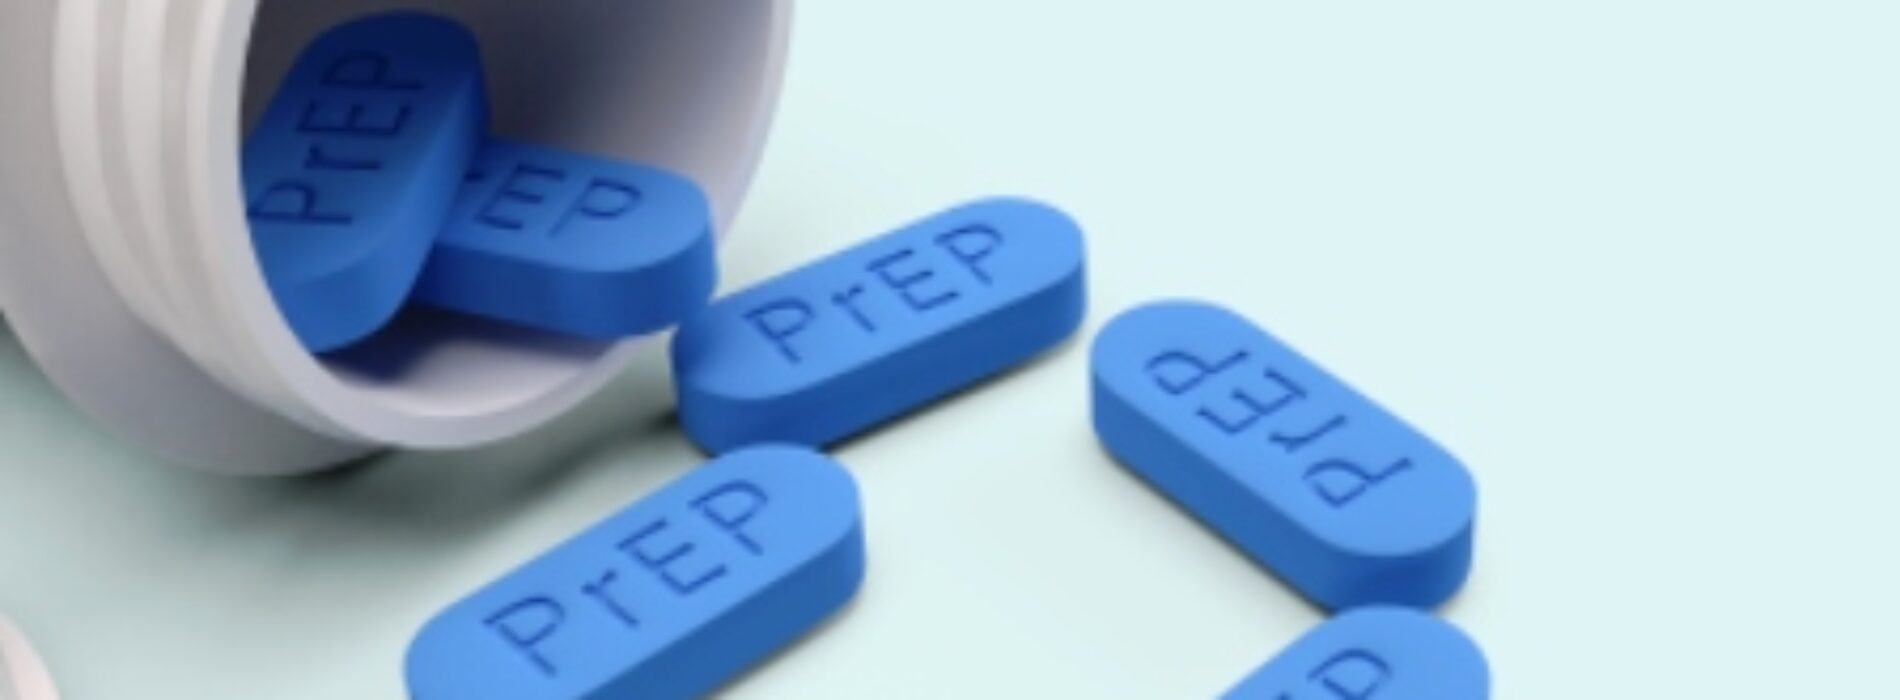 HIV Prevention: Group calls for adoption  of PrEP drug